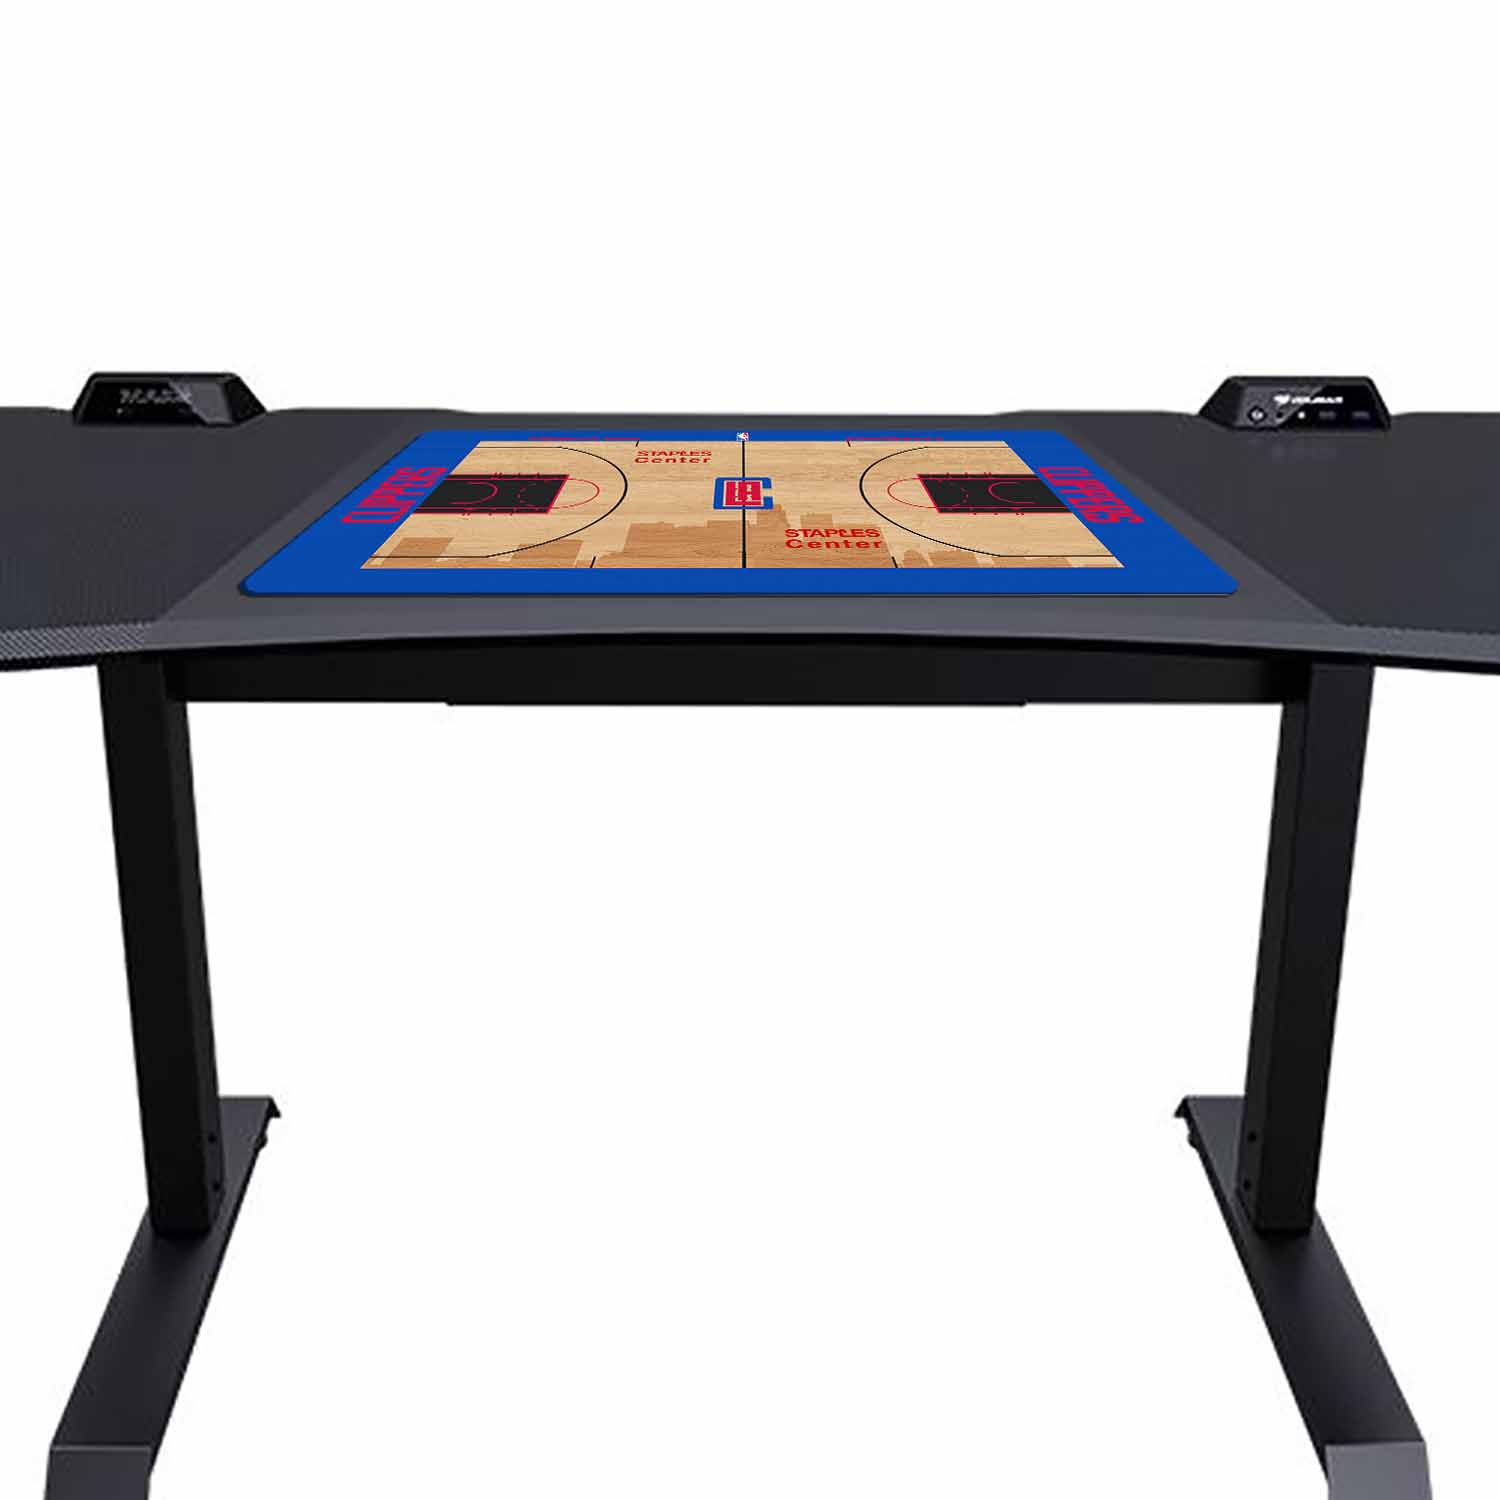 Los Angeles LA Clippers Themed NBA Desk / Gamer Pad